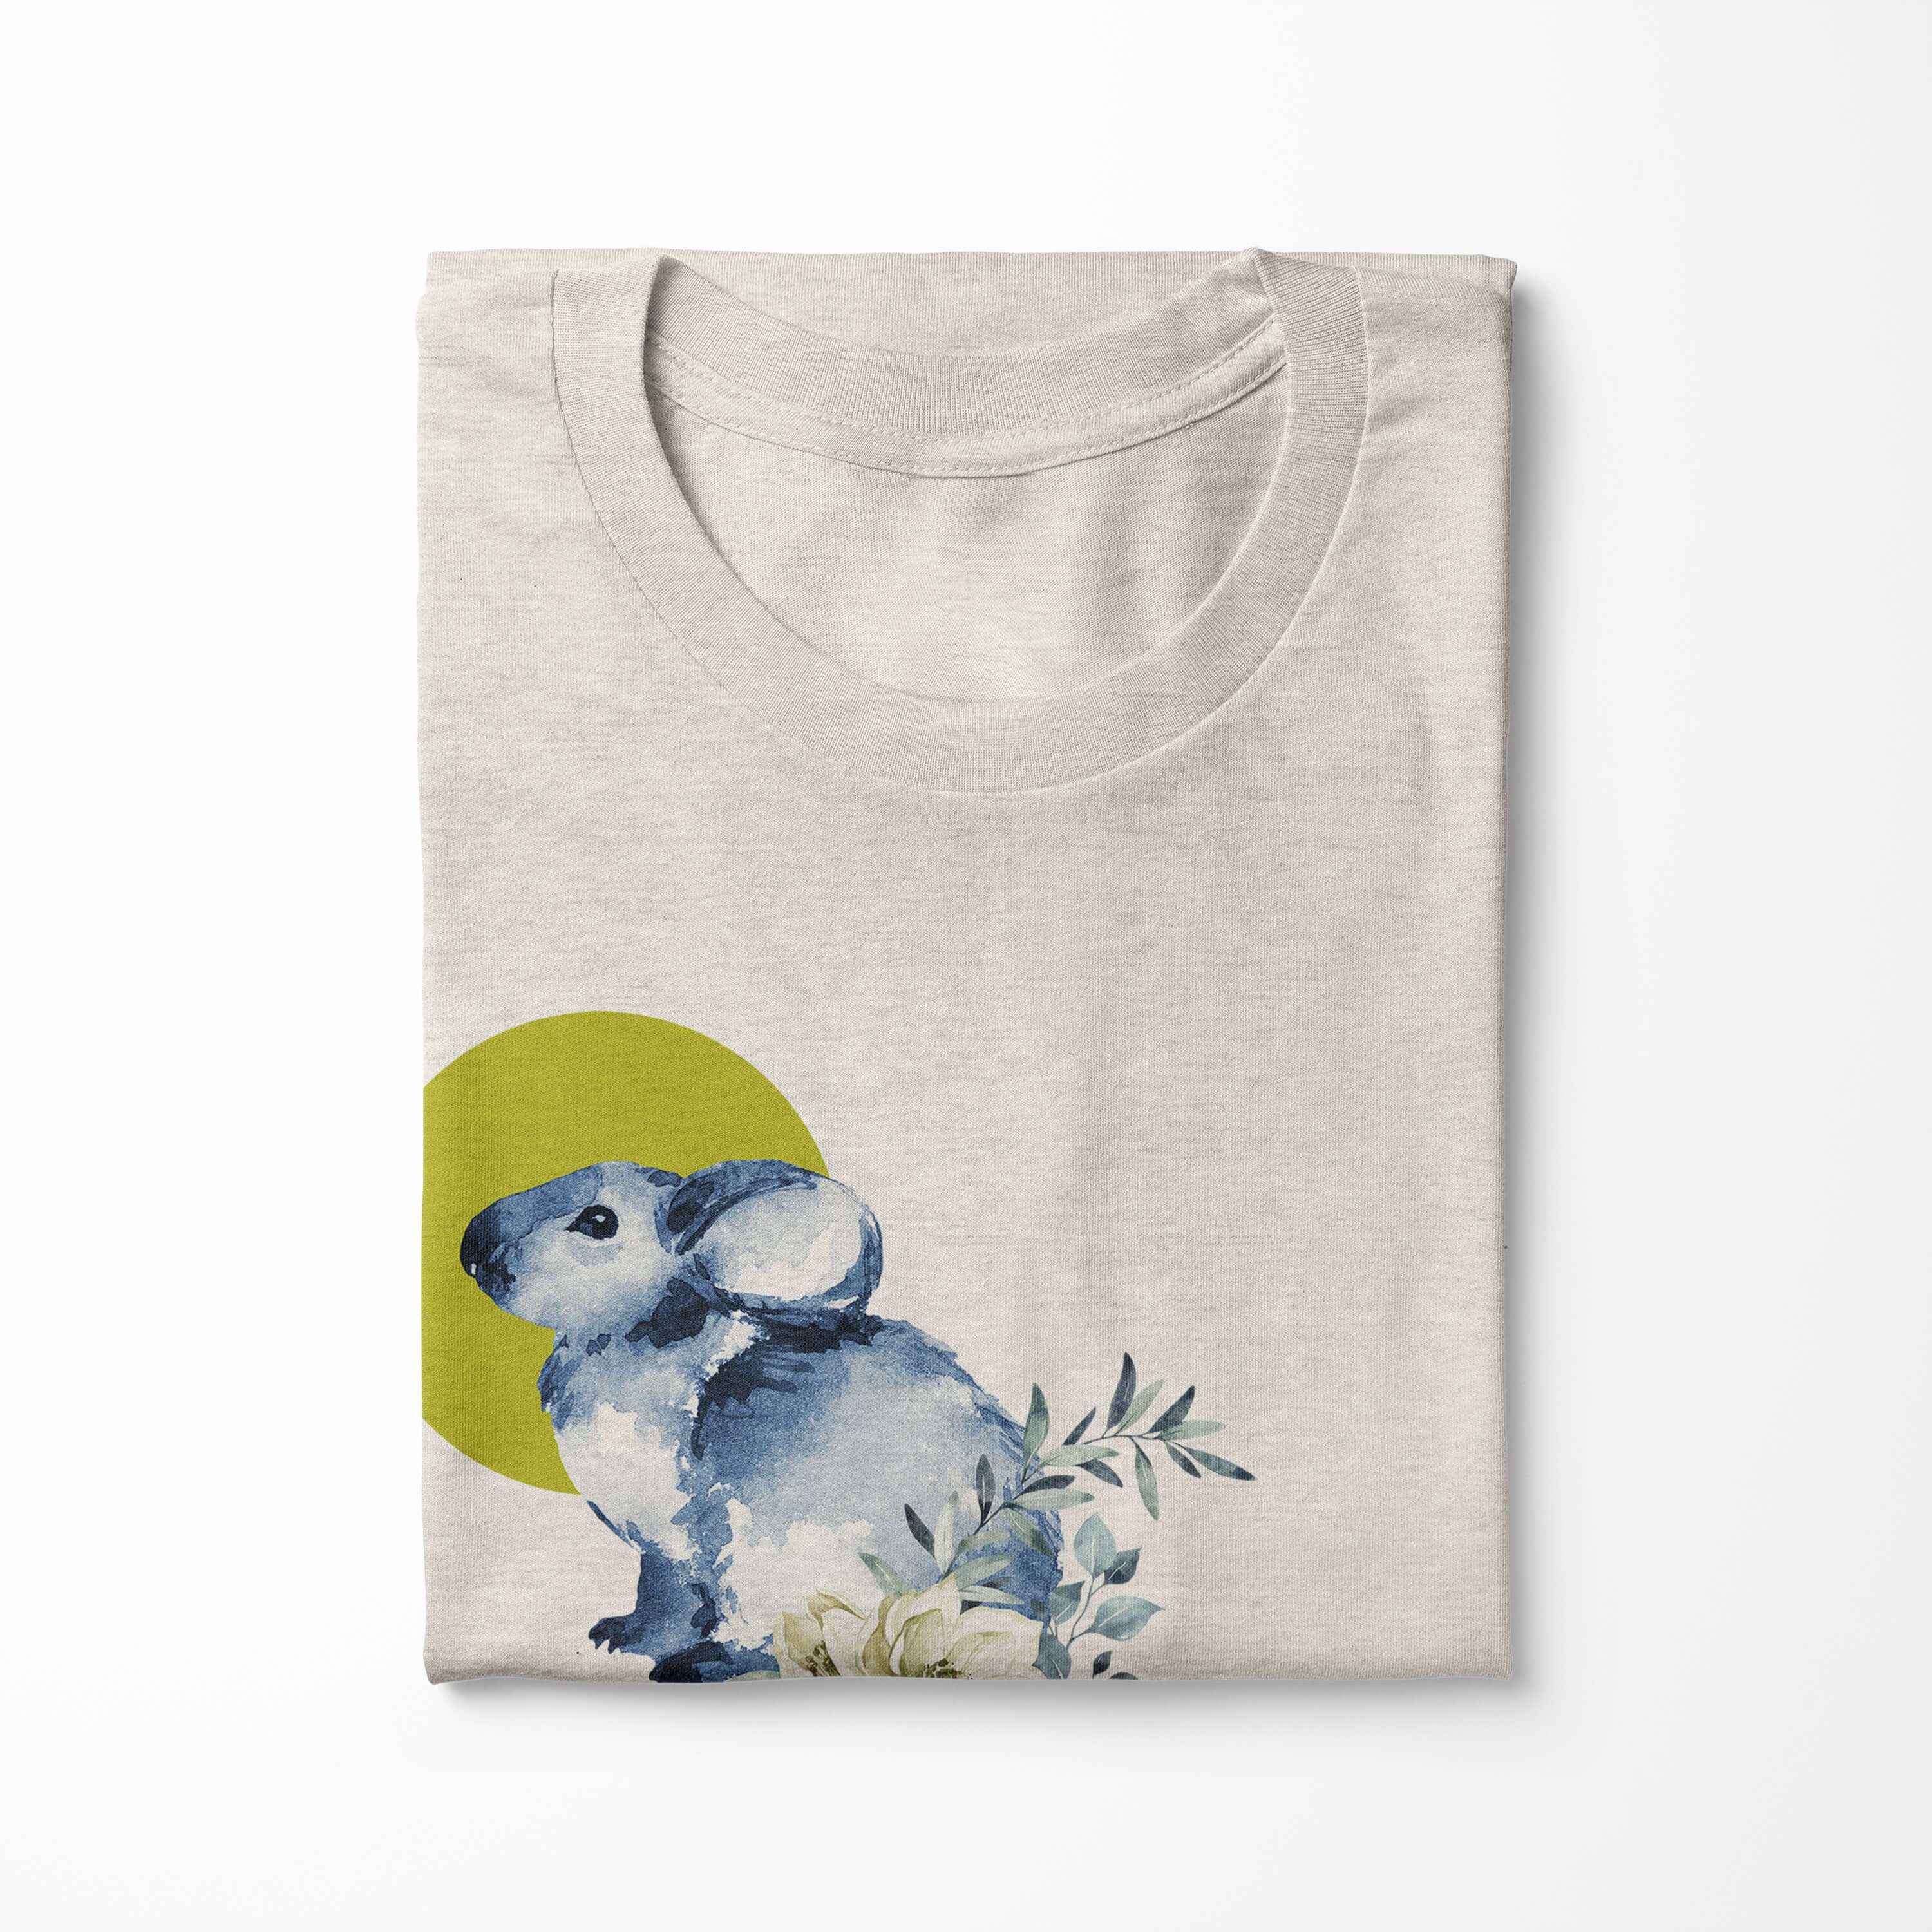 Ökomode Herren 100% T-Shirt Aquarell Maus Art Motiv Sinus (1-tlg) Shirt Bio-Baumwolle aus Nachhaltig Blumen T-Shirt gekämmte